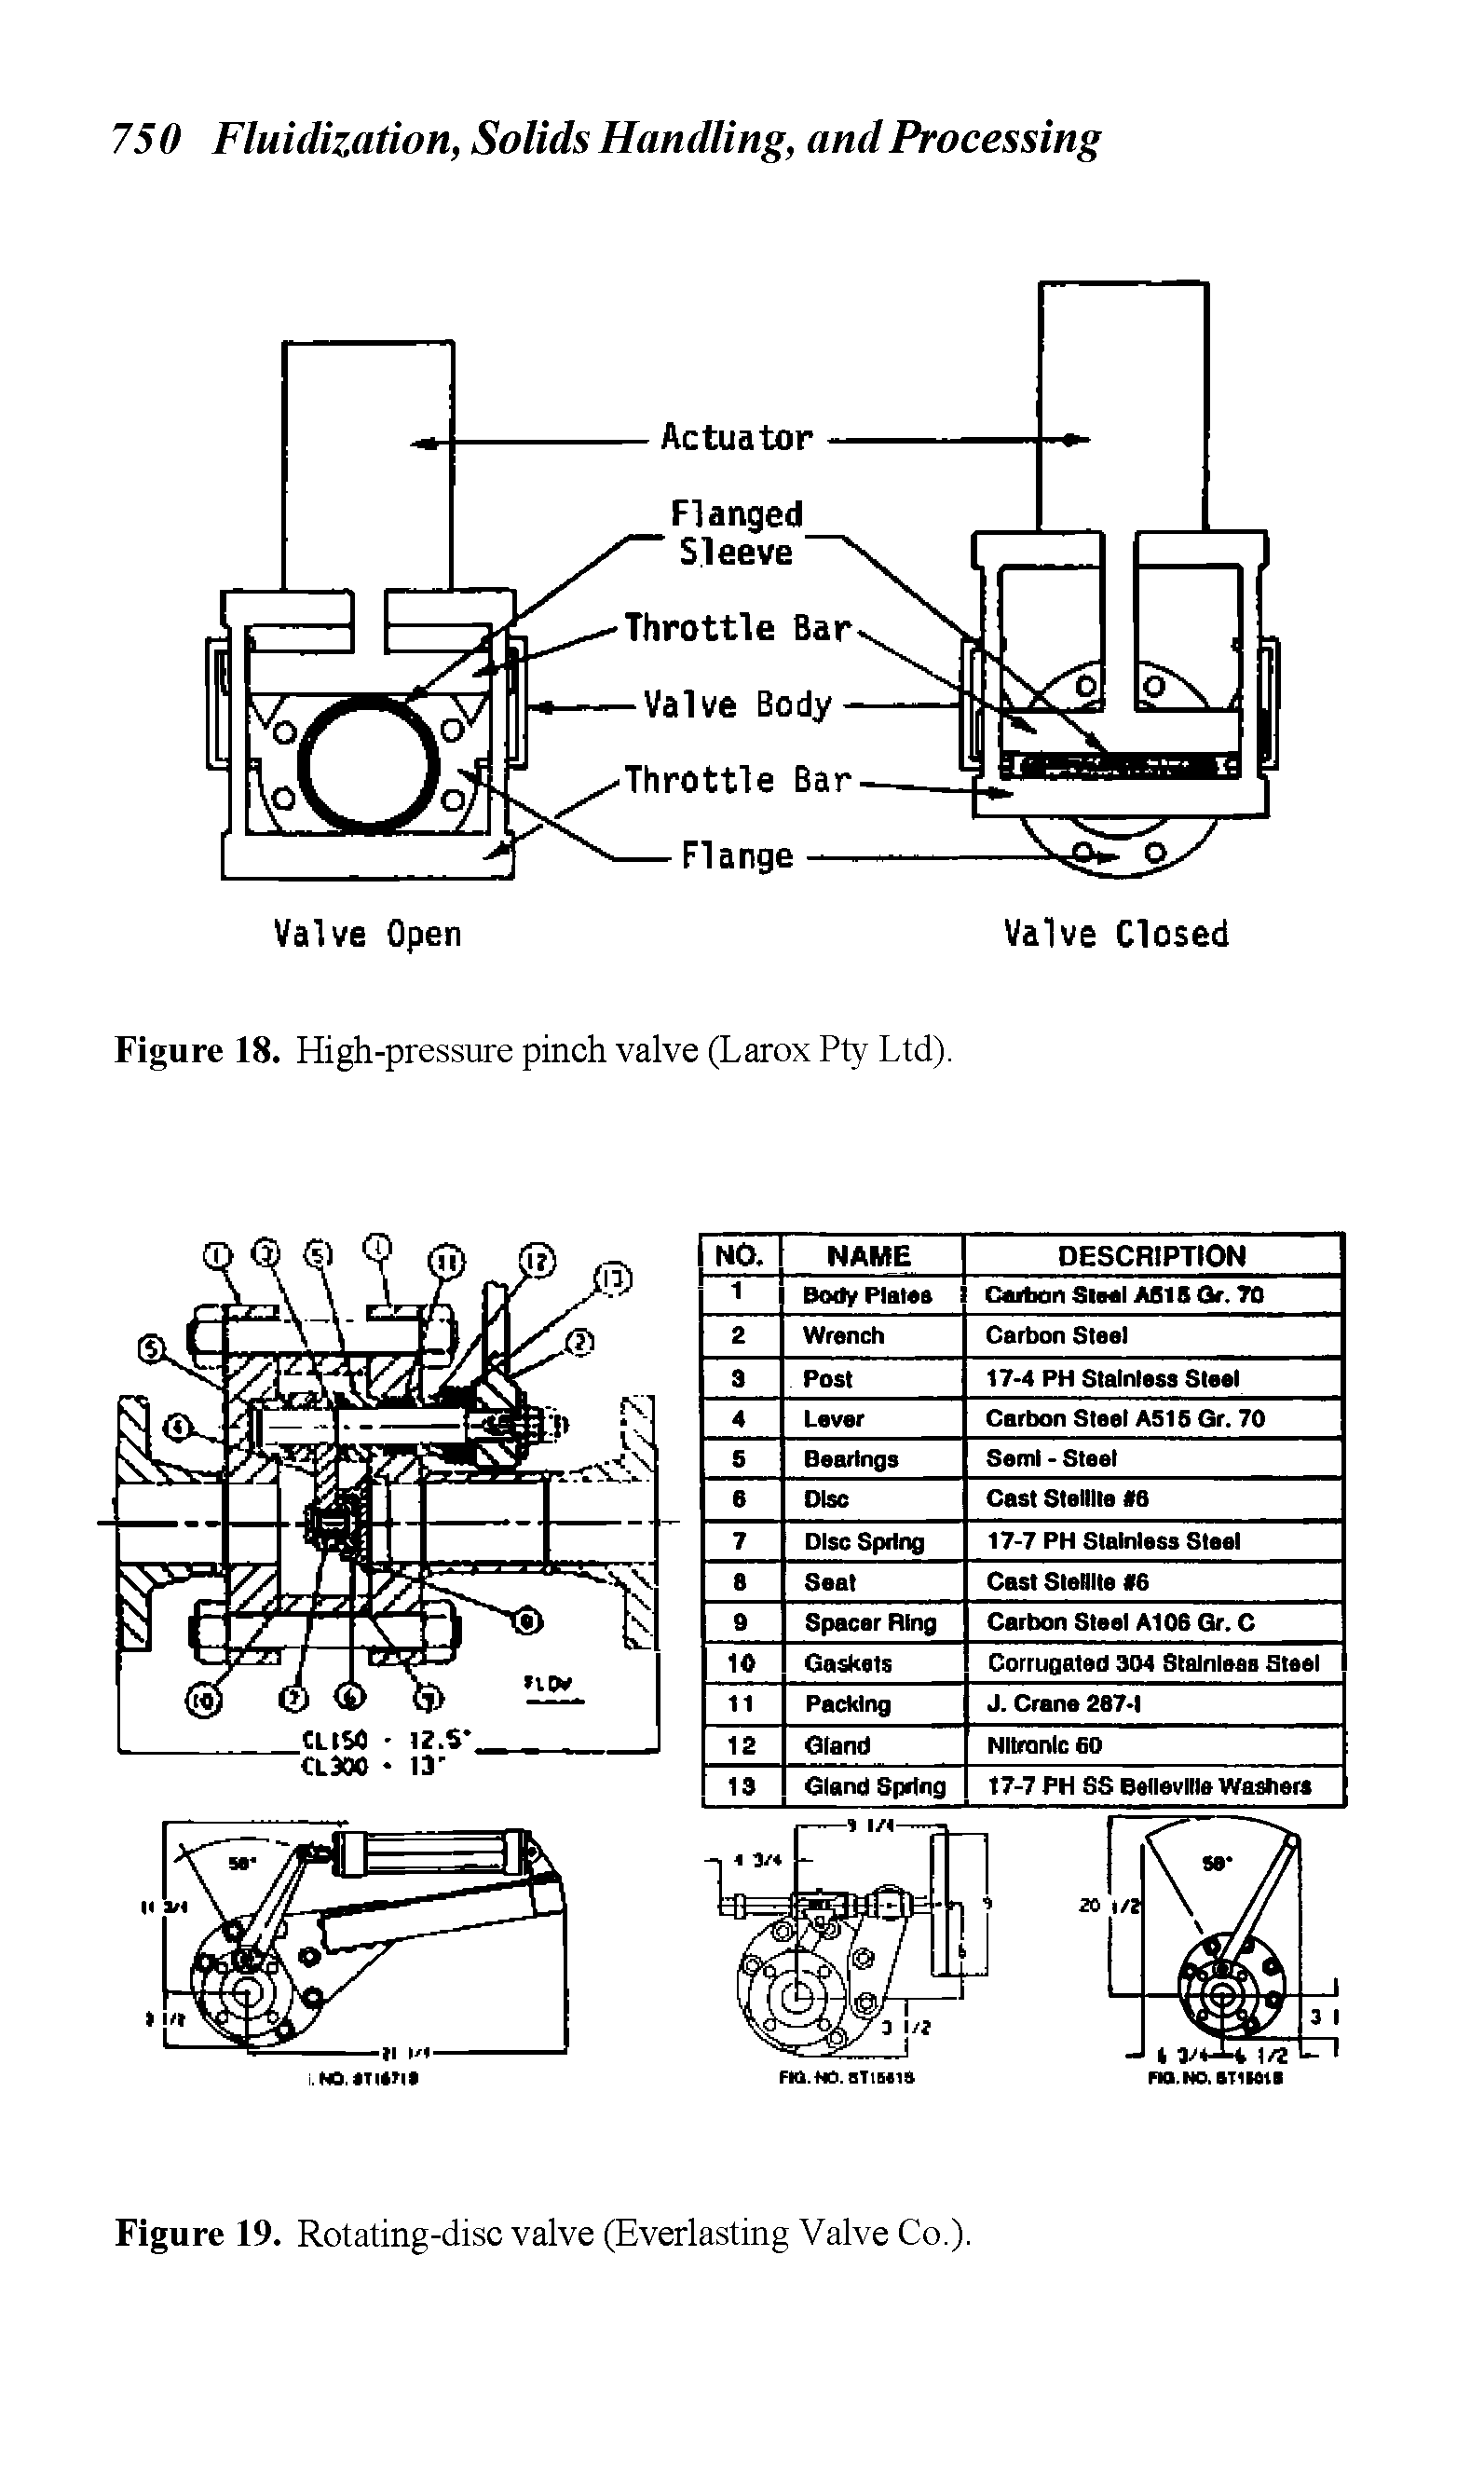 Figure 18. High-pressure pinch valve (Larox Pty Ltd).